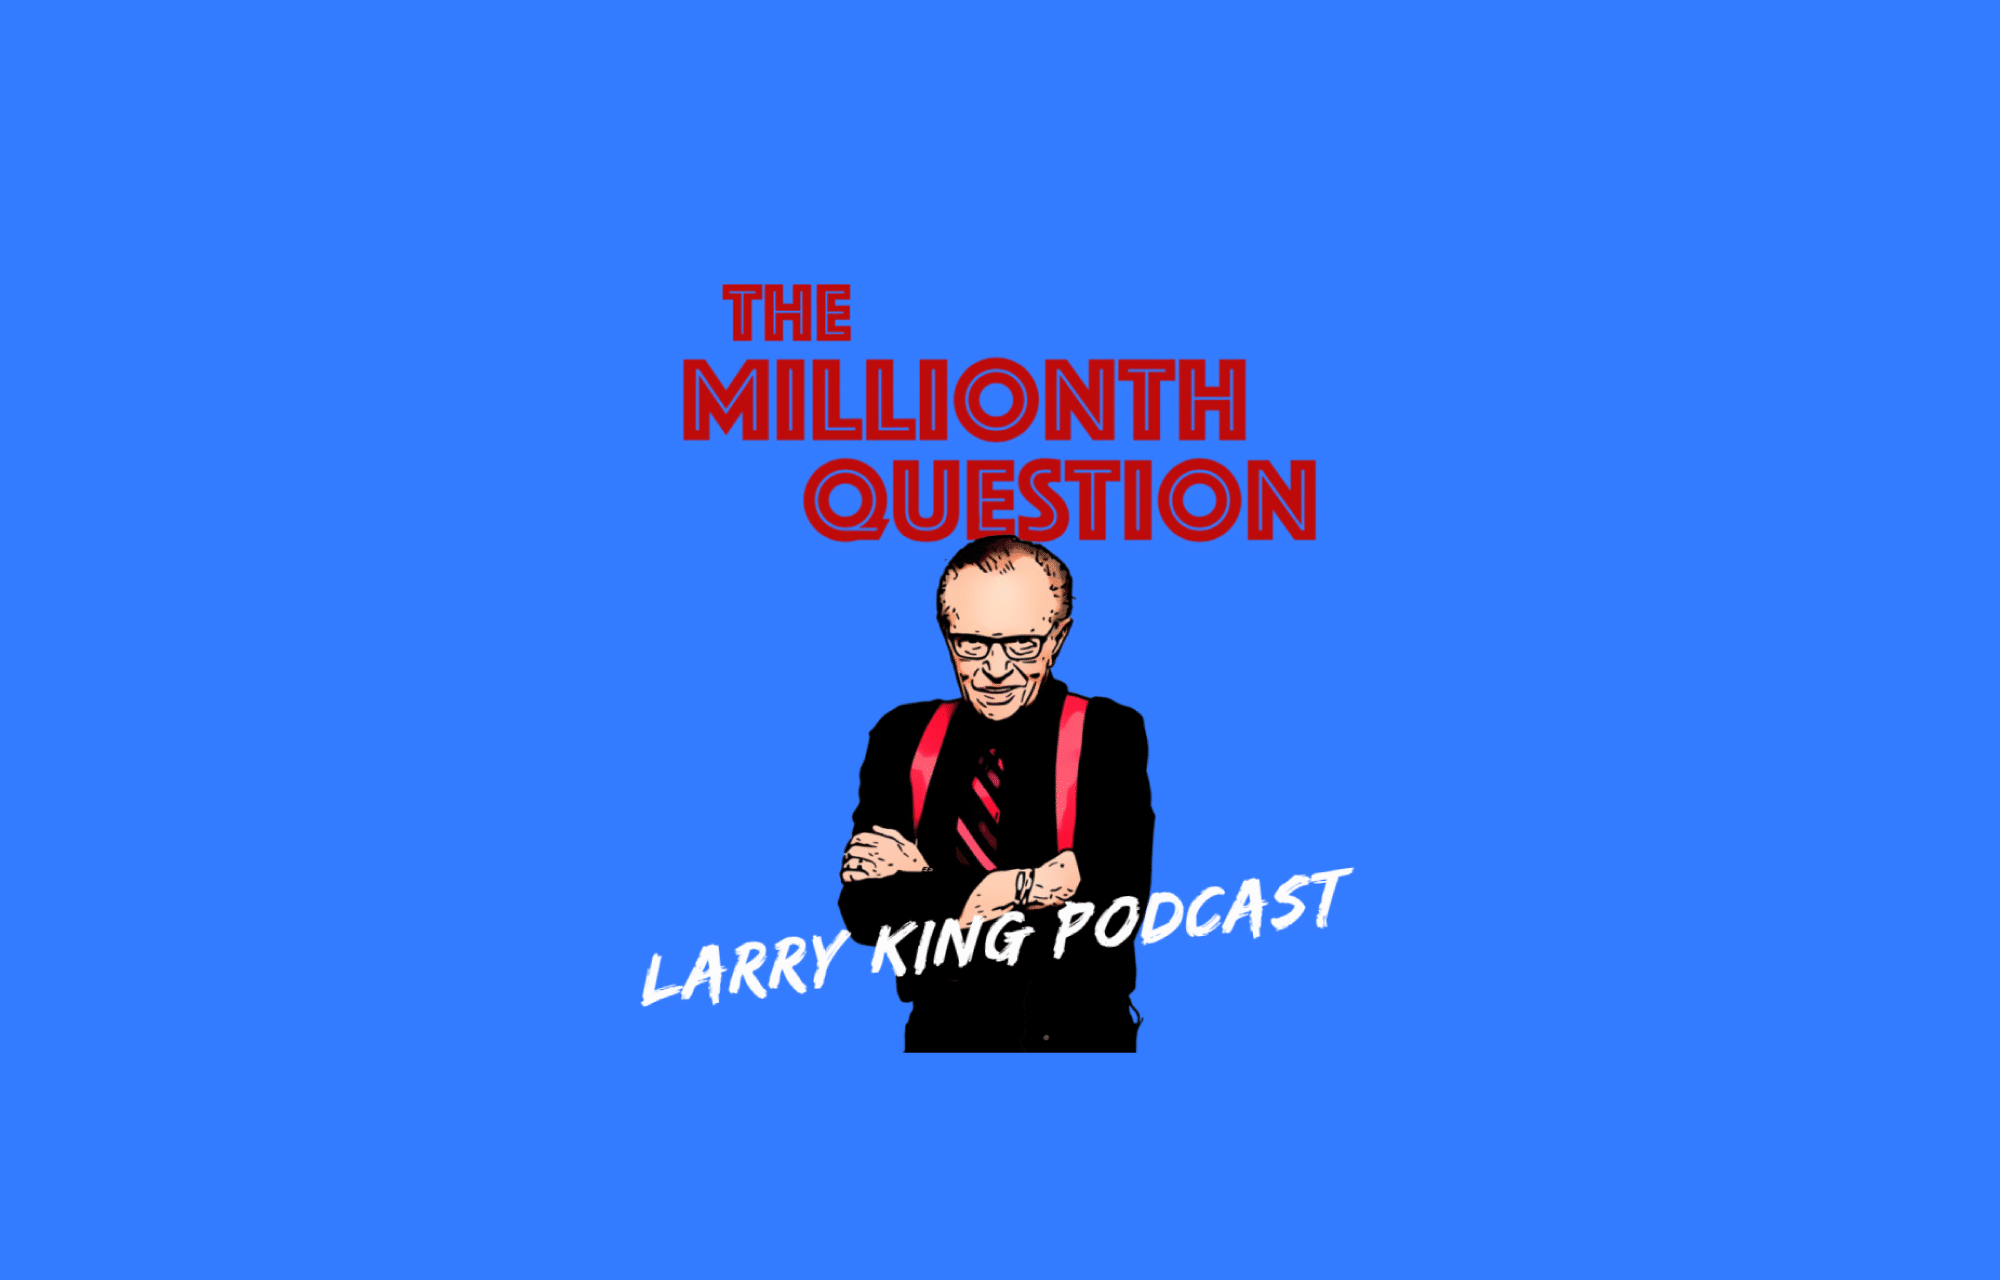 Larry King Podcast